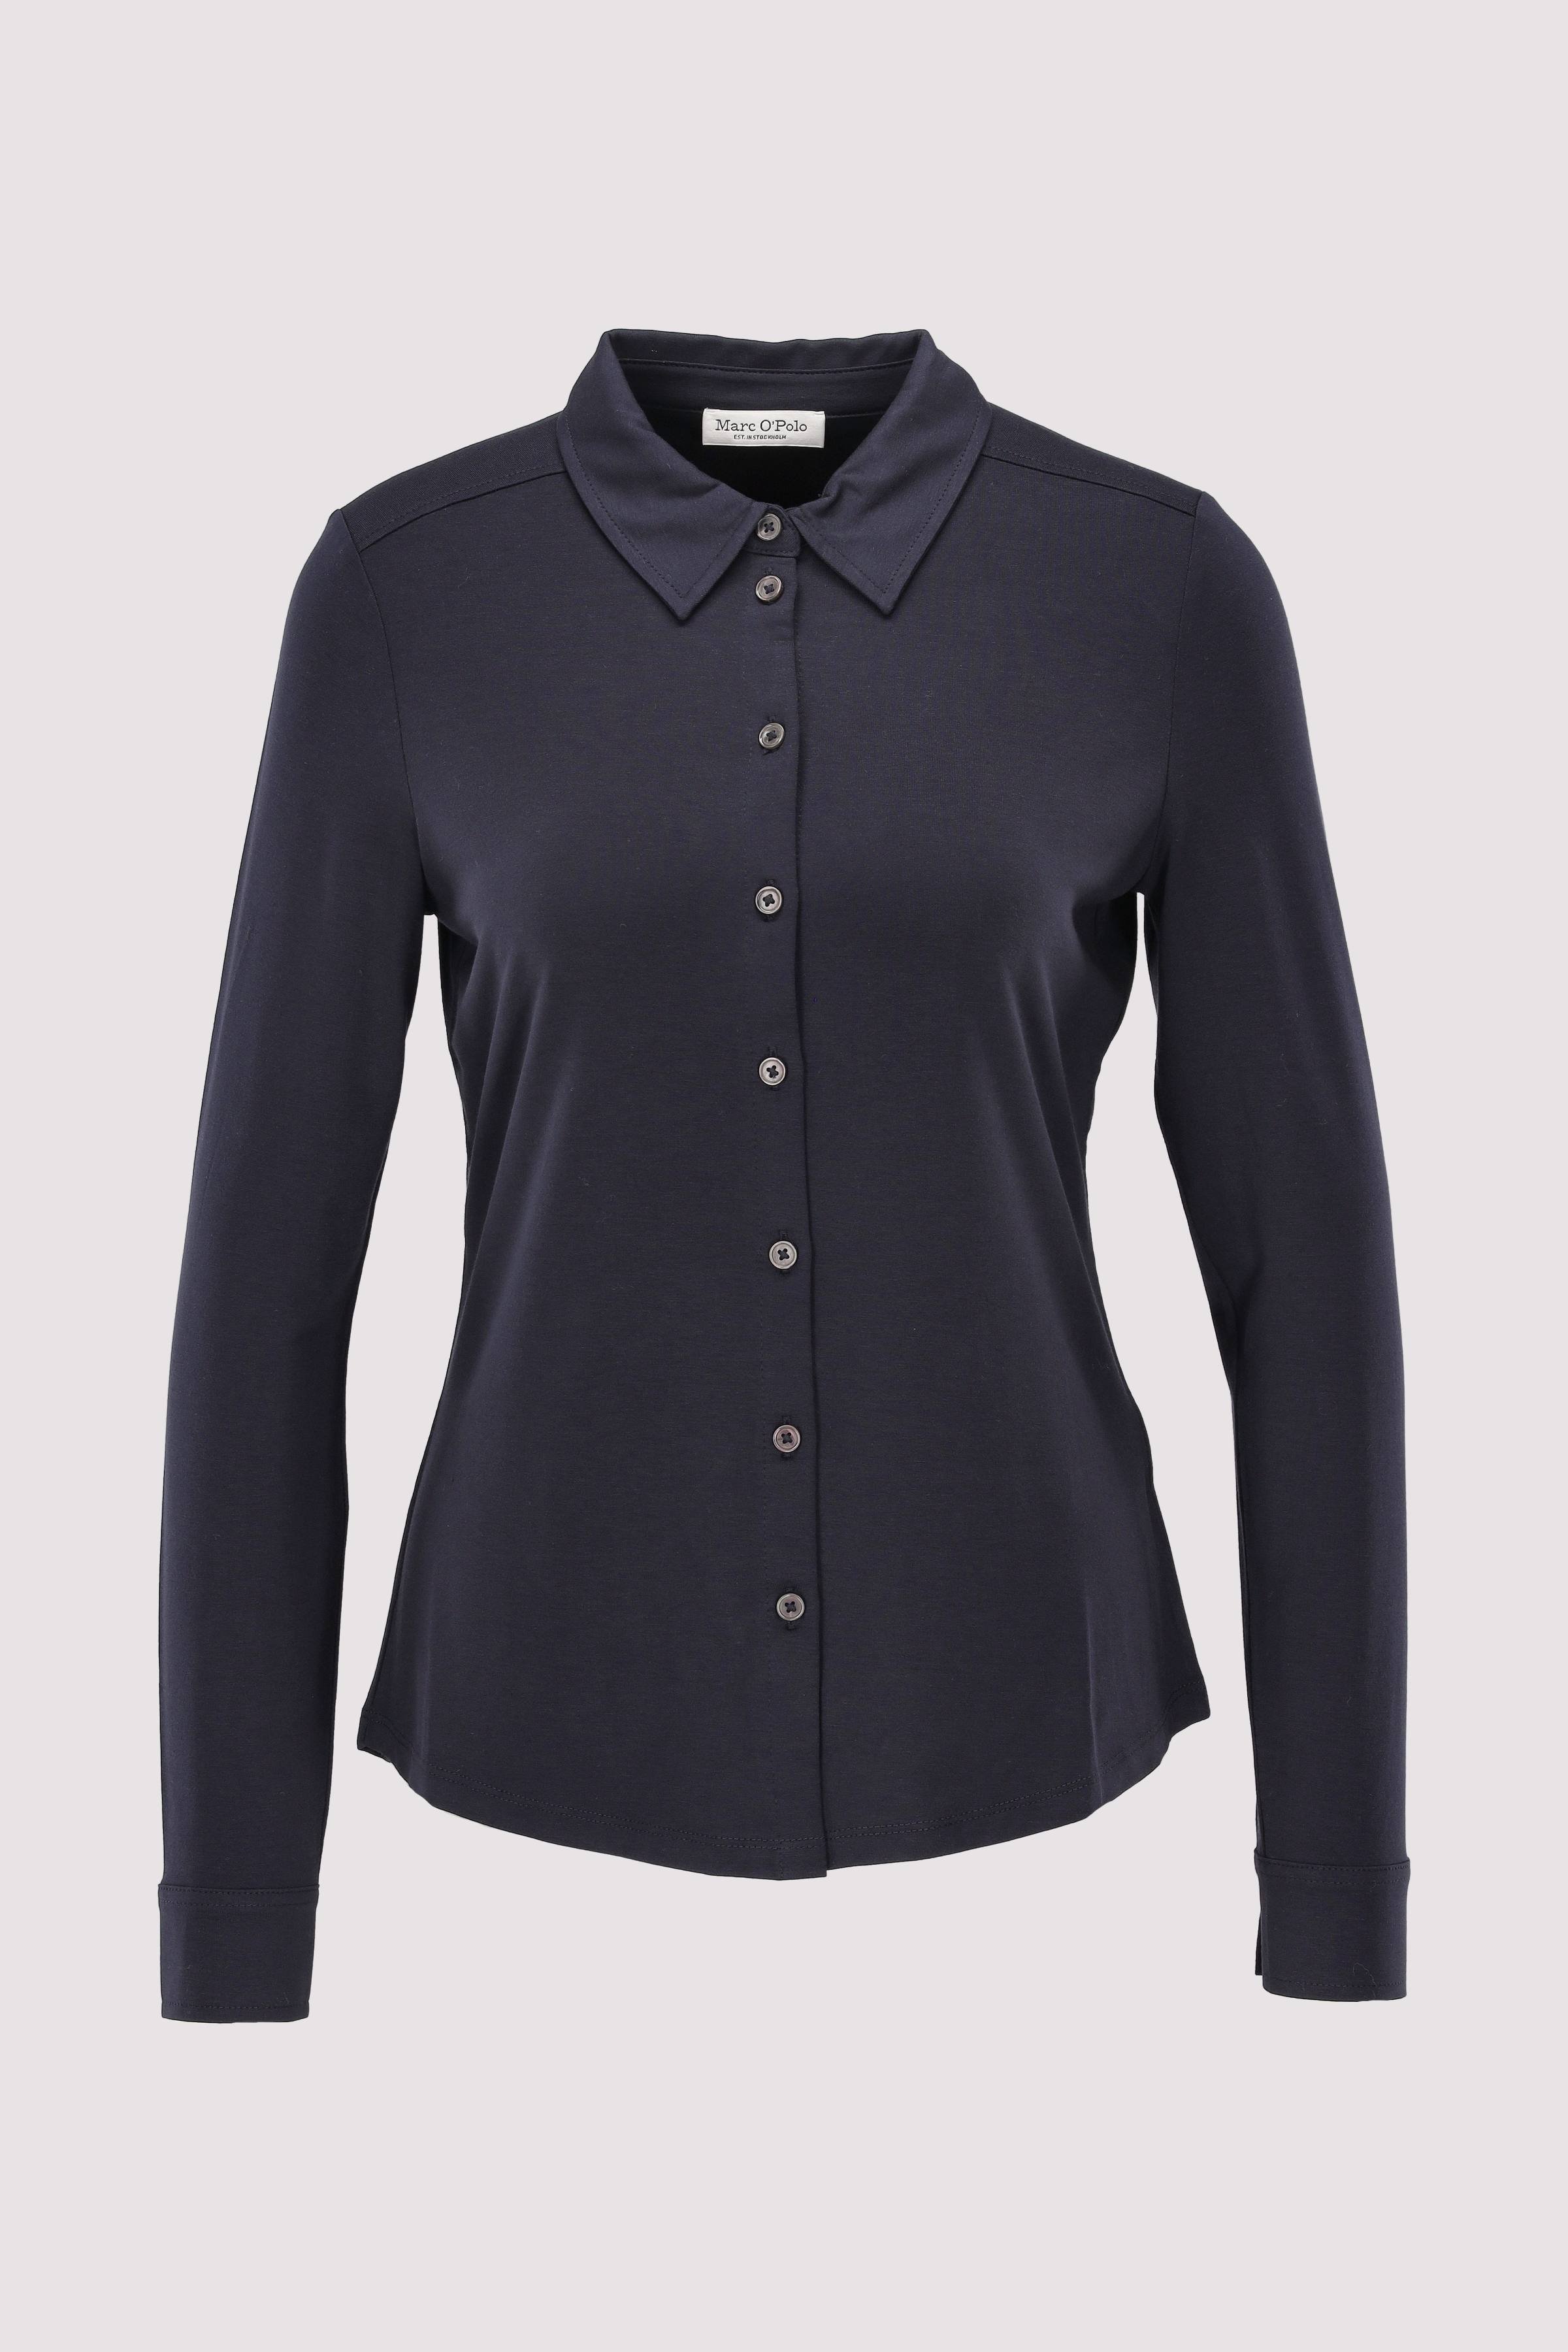 Jersey-blouse, long sleeve, co